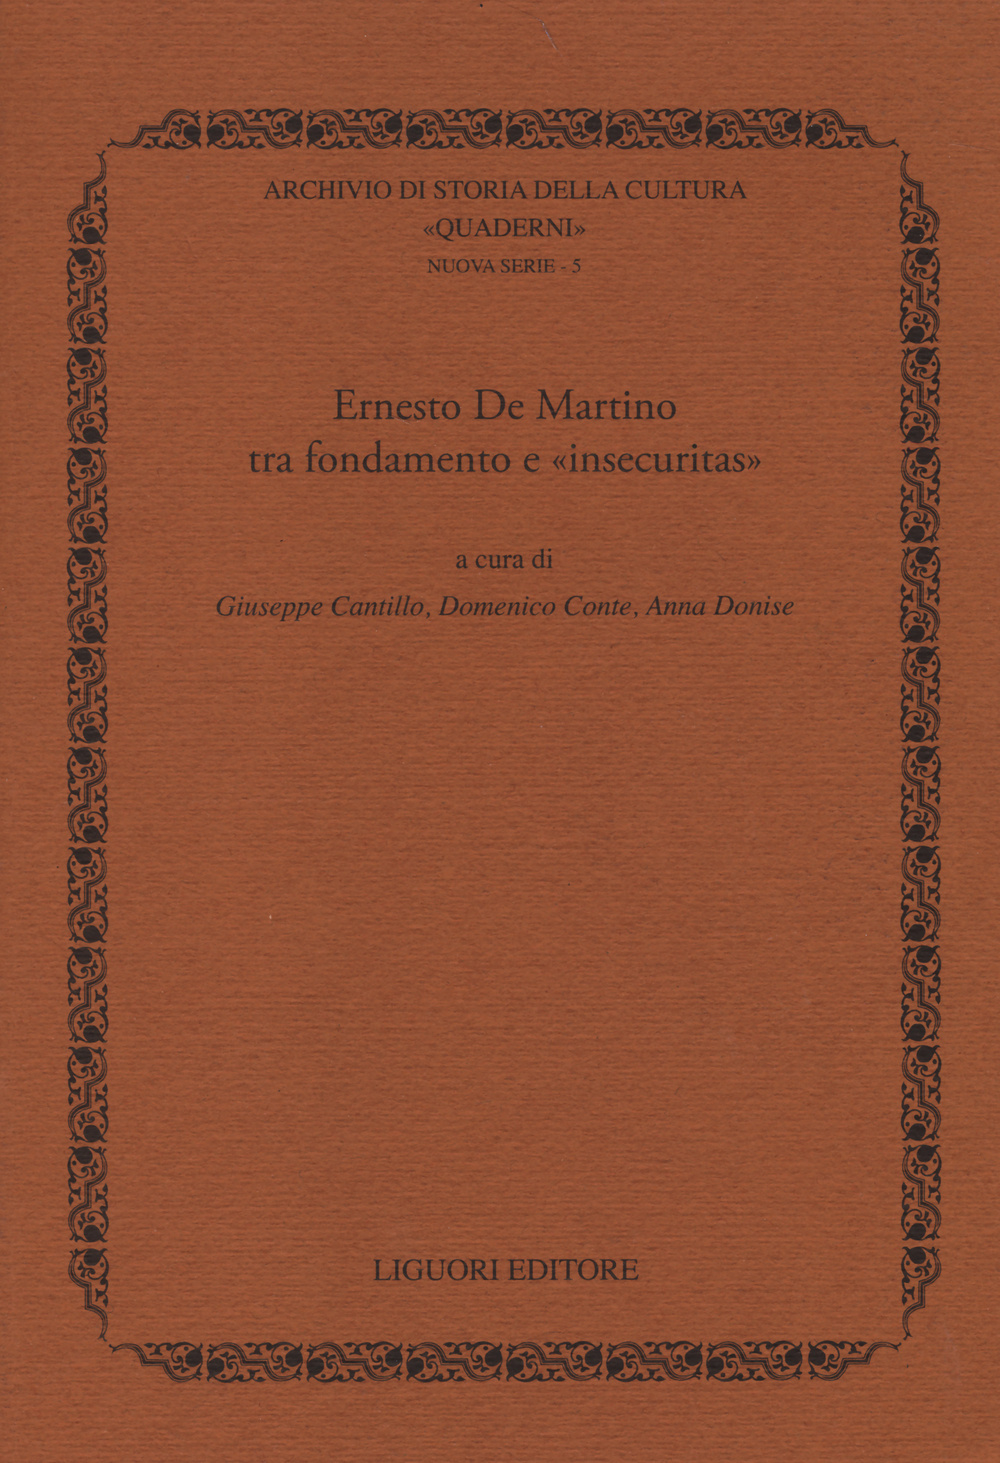 Ernesto De Martino tra fondamento e «insecuritas»